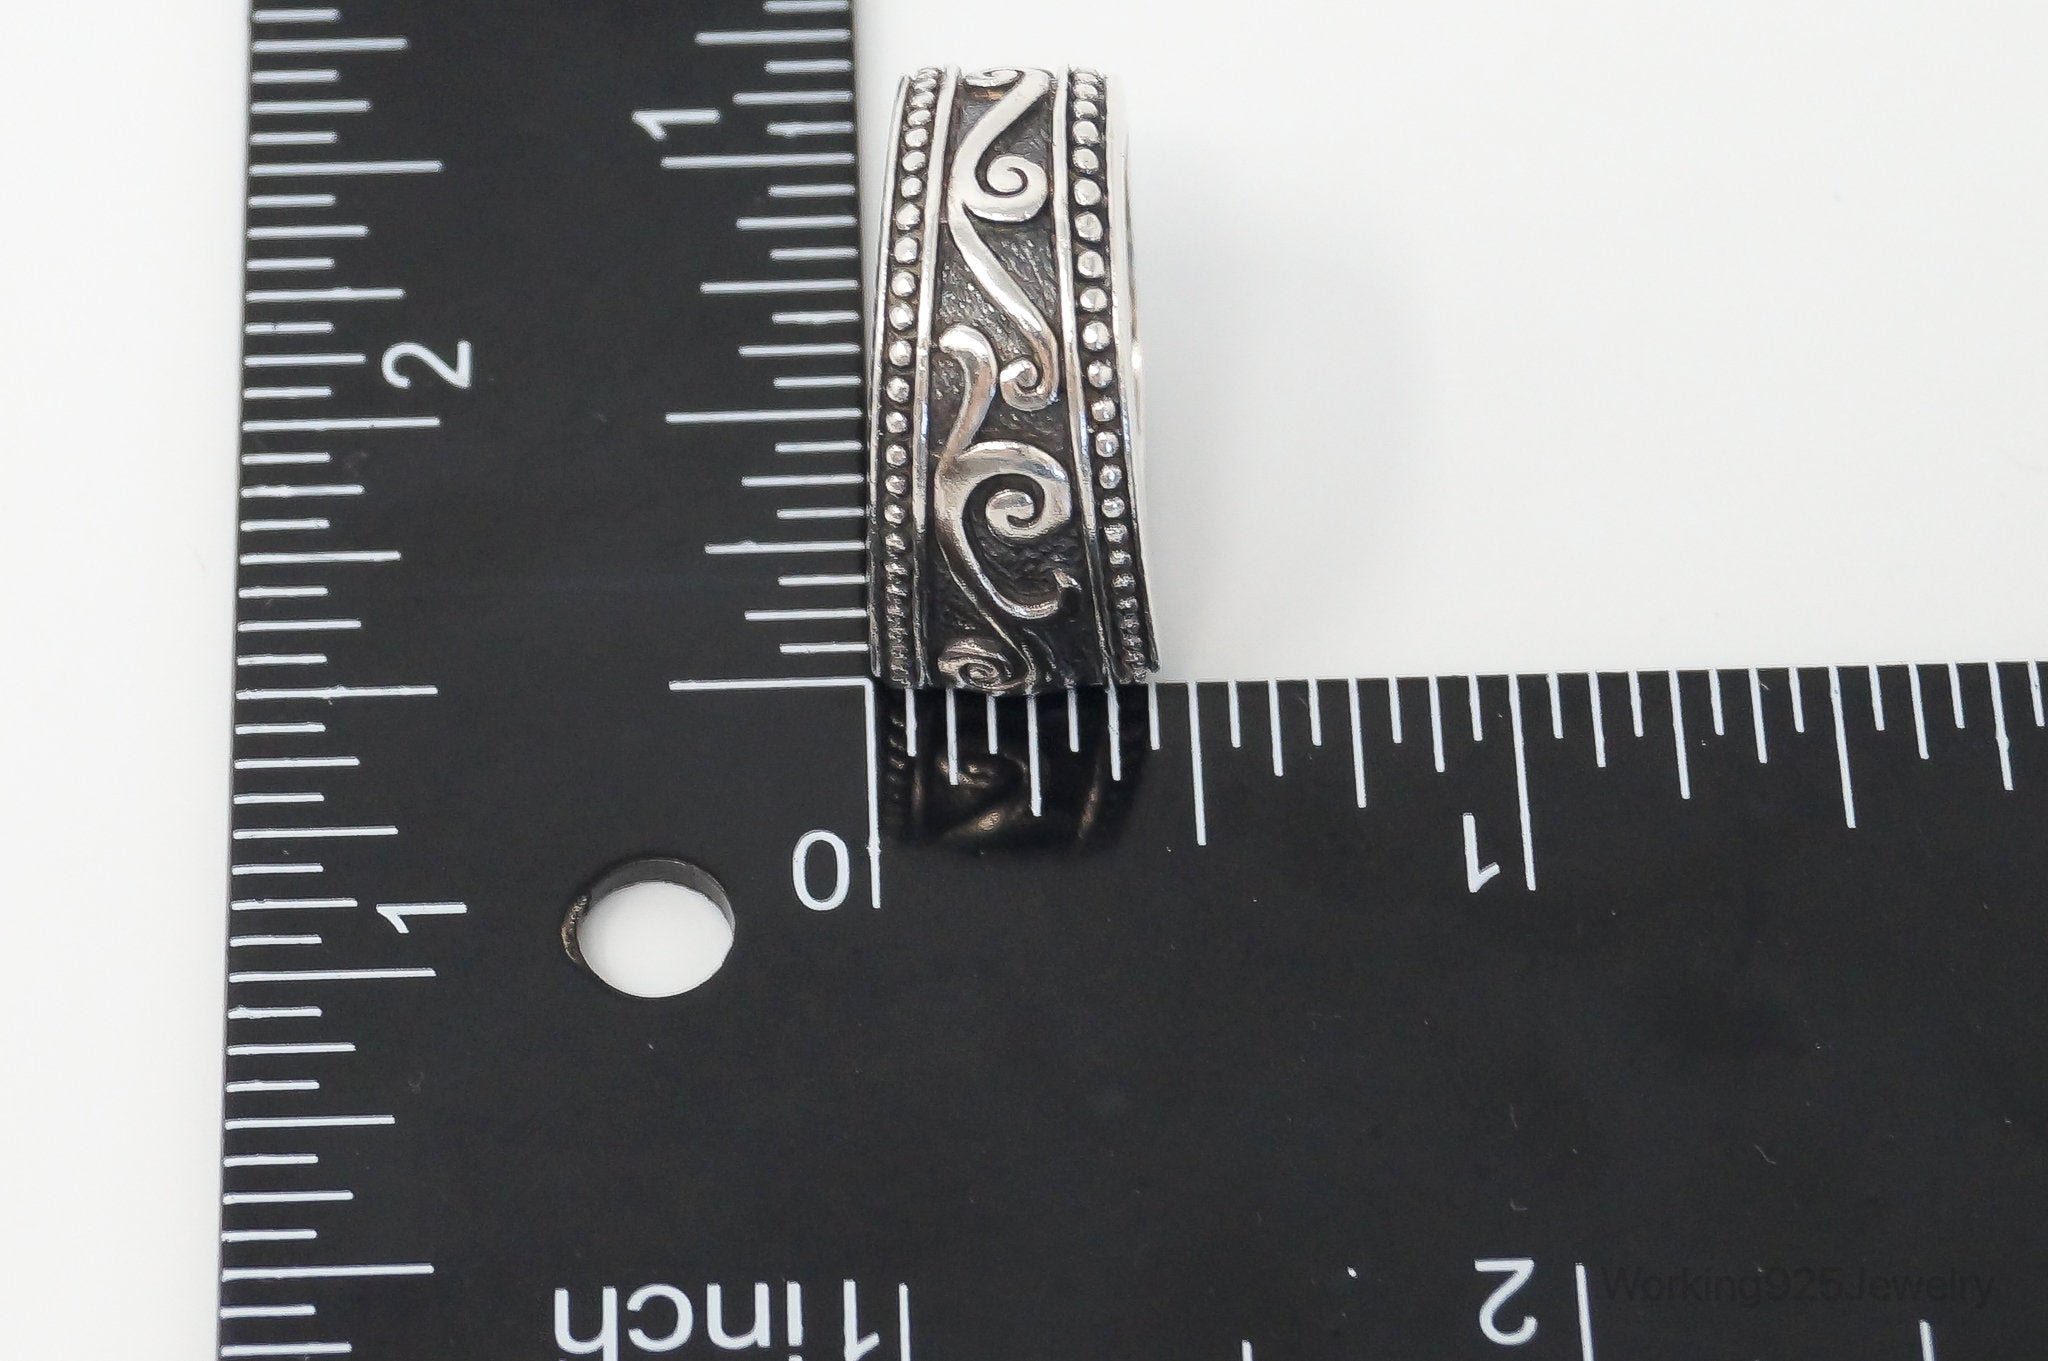 Designer Brighton Scroll Oxidized Sterling Silver Ring - Size 6.25